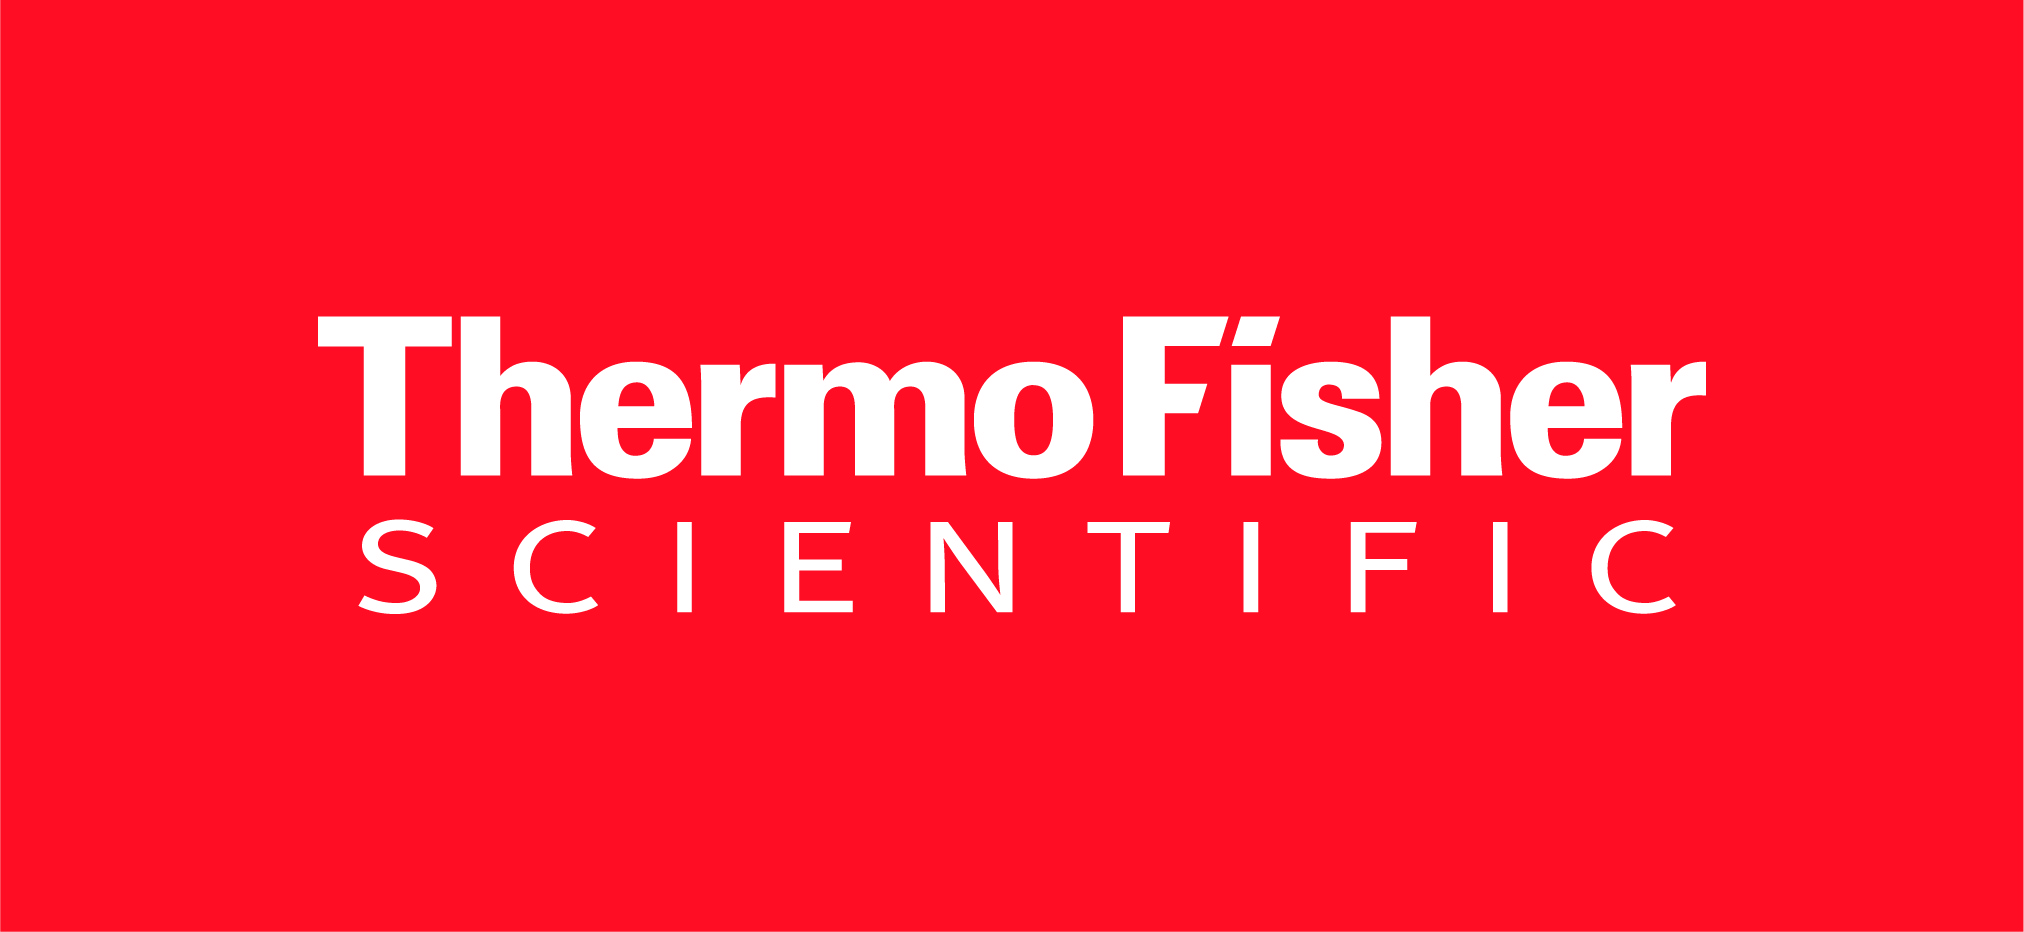 Thermo_Fisher_Scientific_-_Red_BG